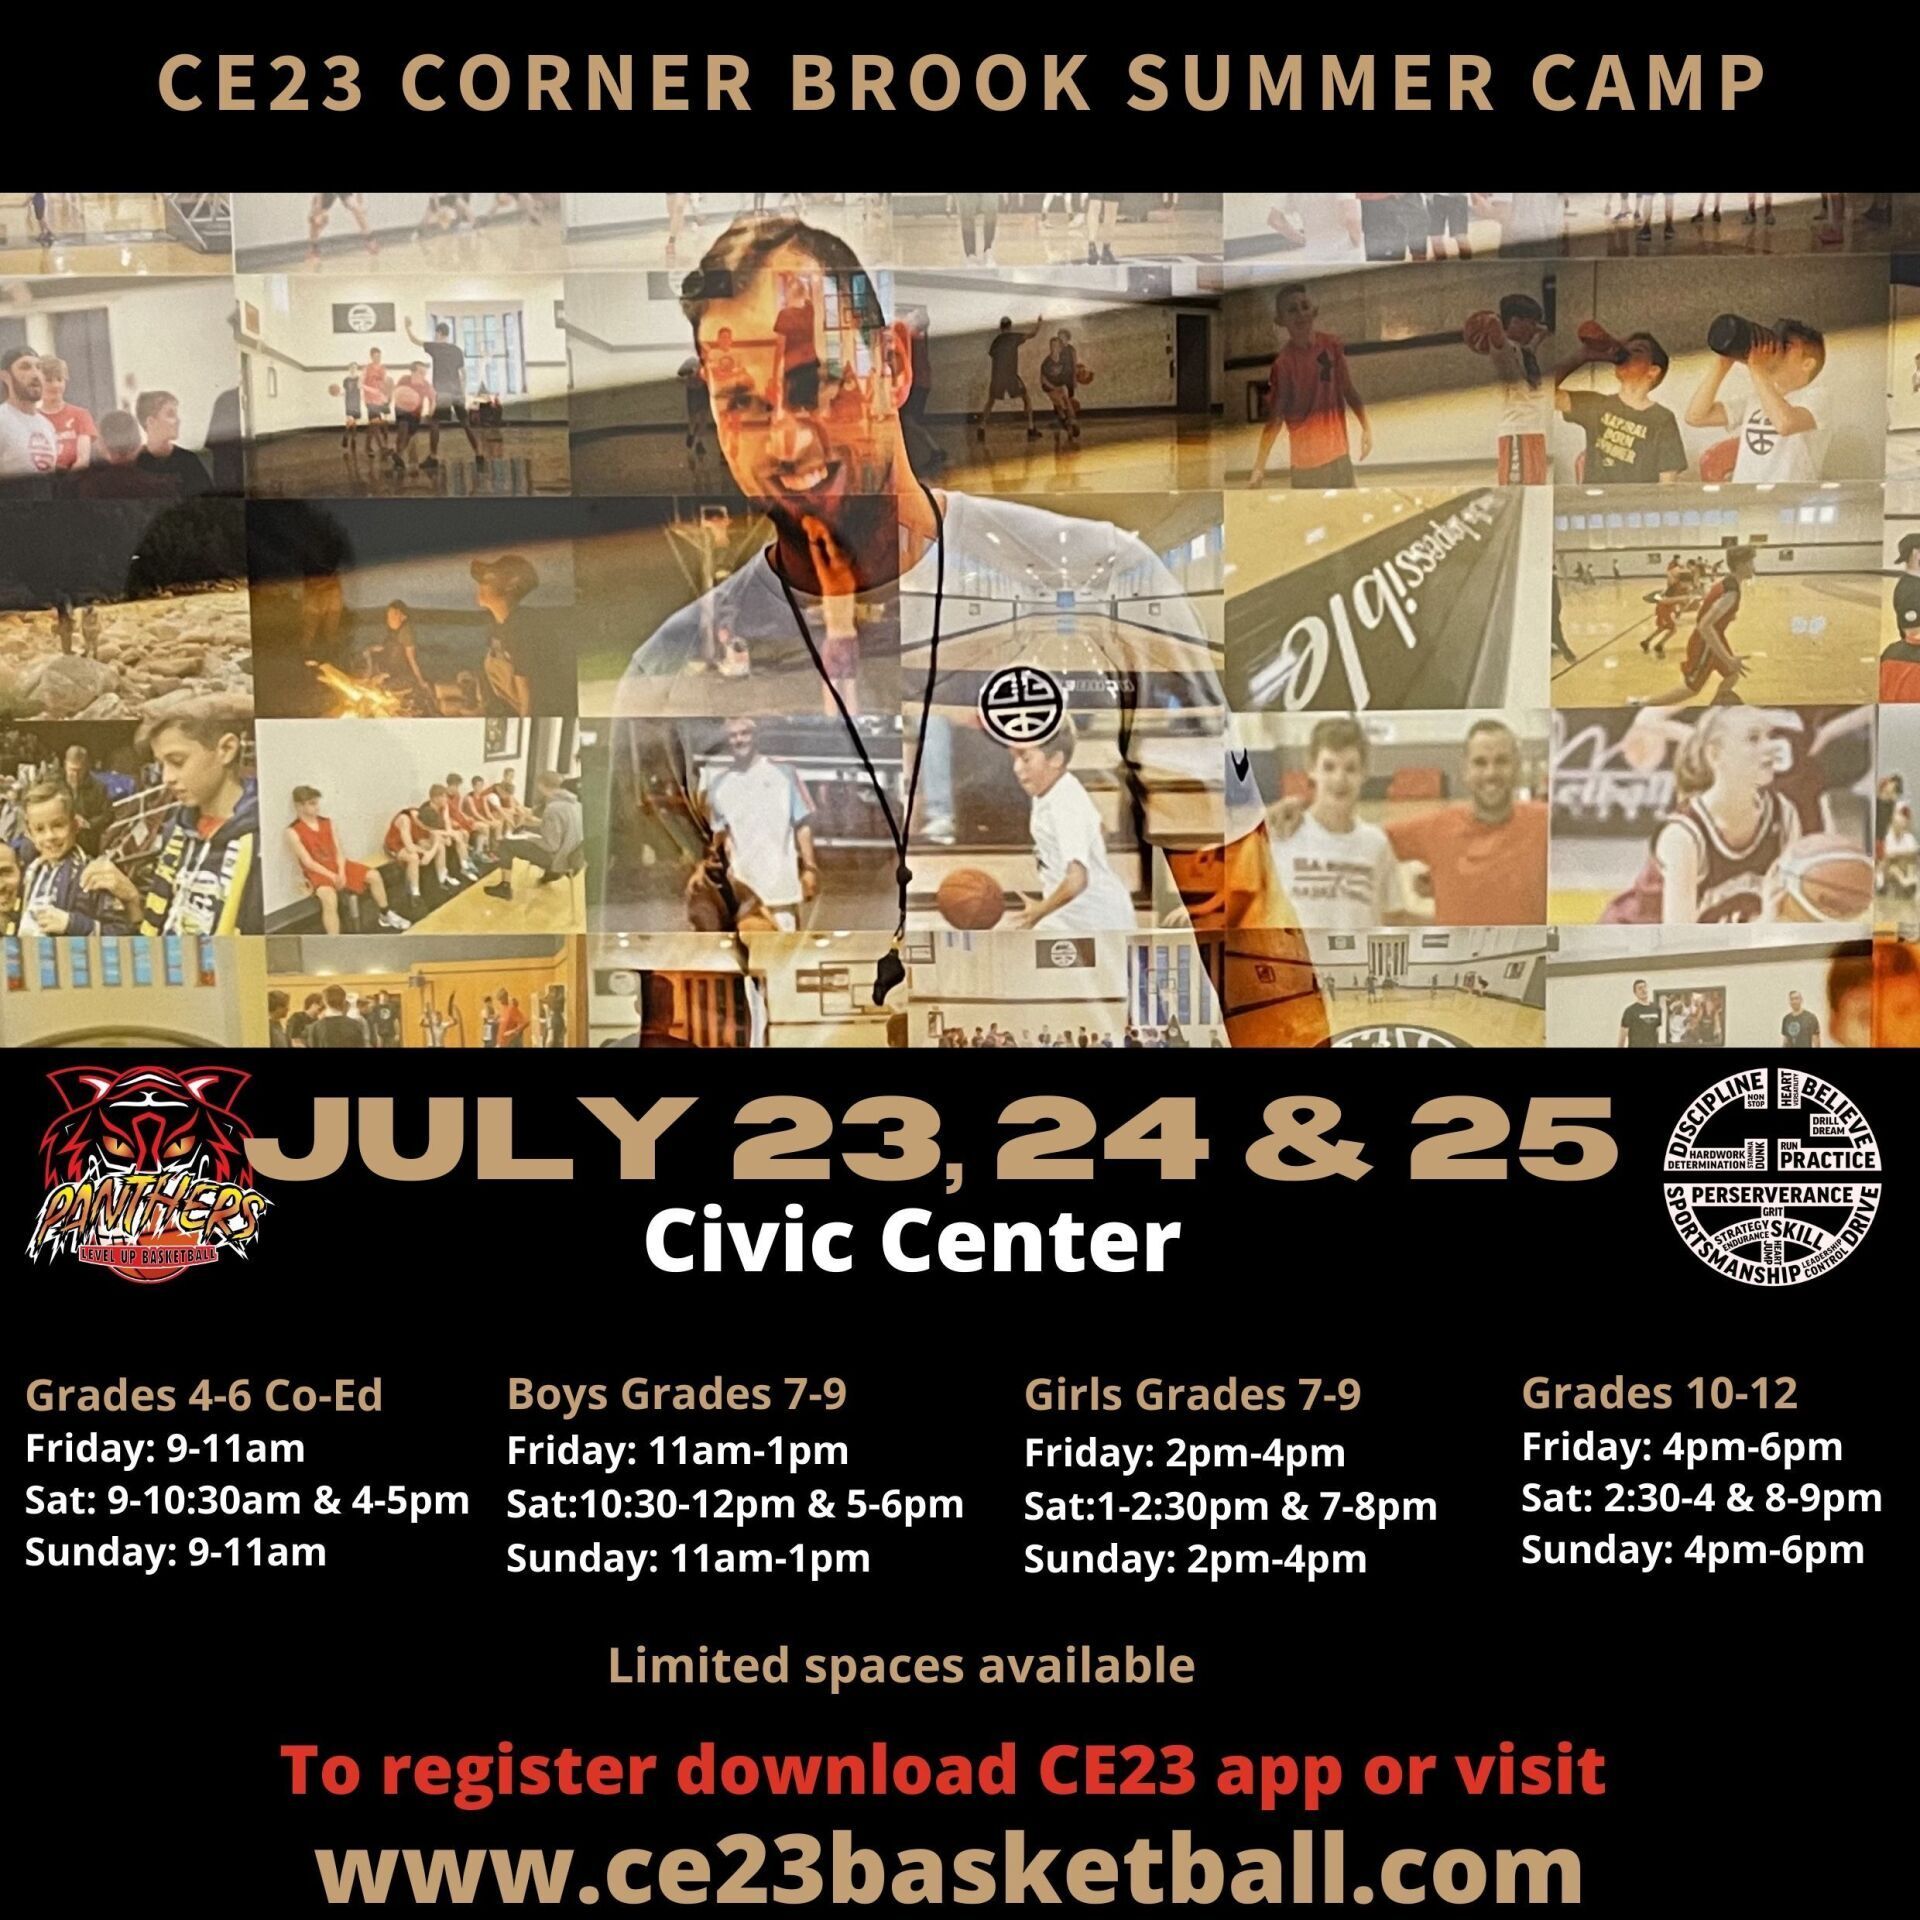 CE23 Corner Brook Summer Camp